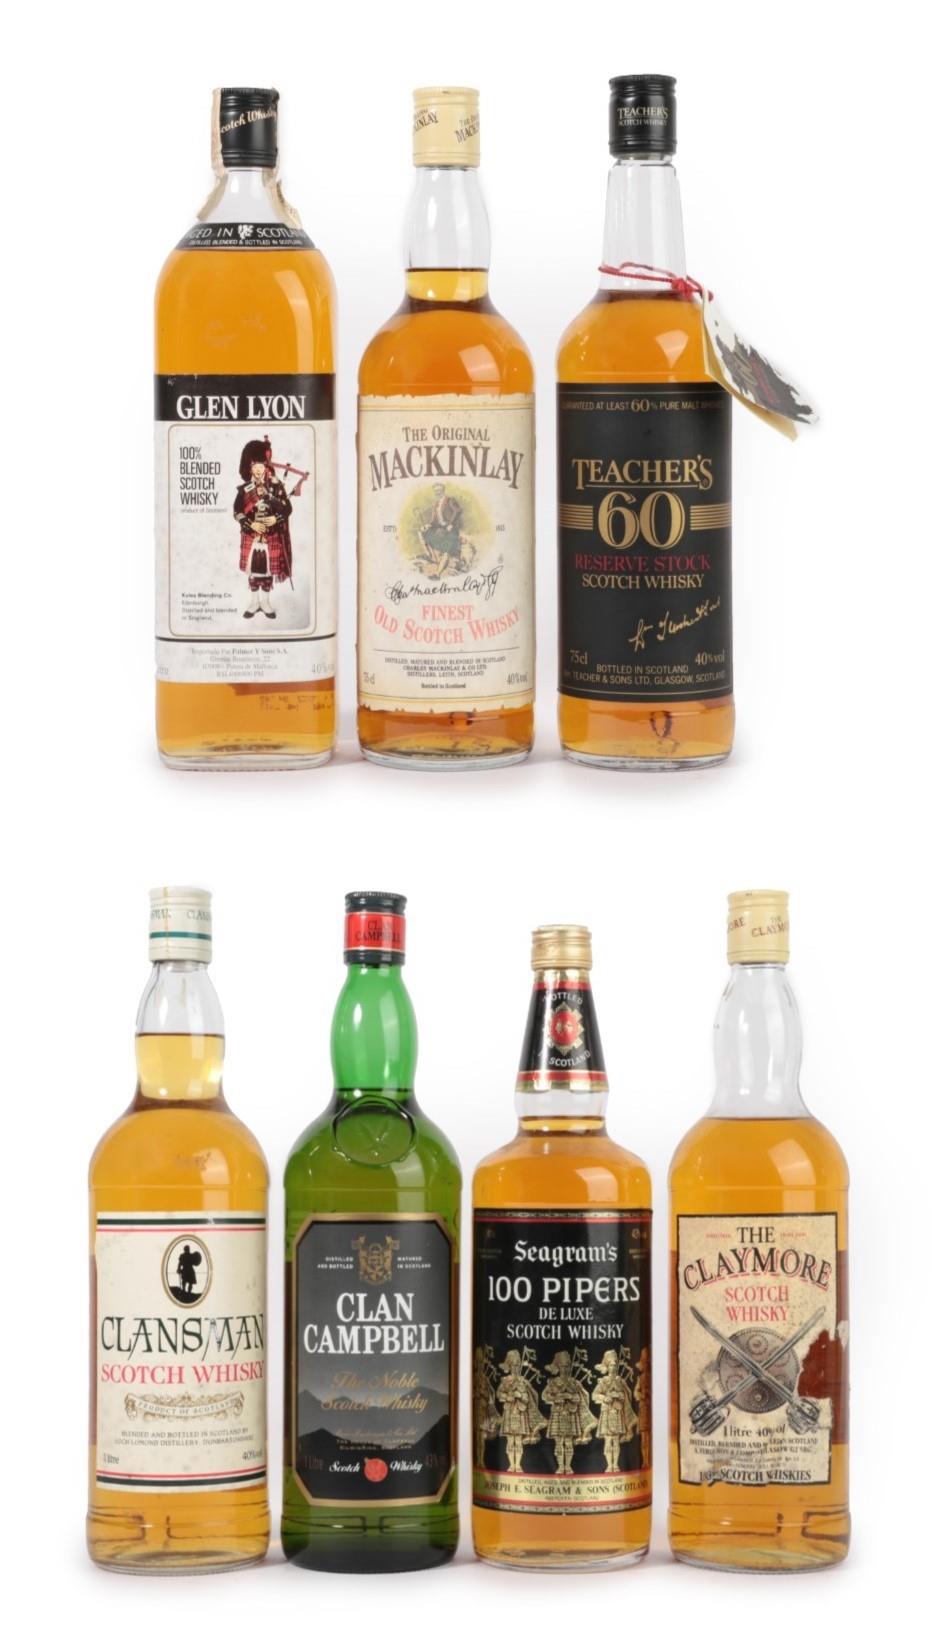 Teacher's 60 Reserve Stock Scotch Whisky, 1980s bottling, 40% vol 75cl (one bottle),